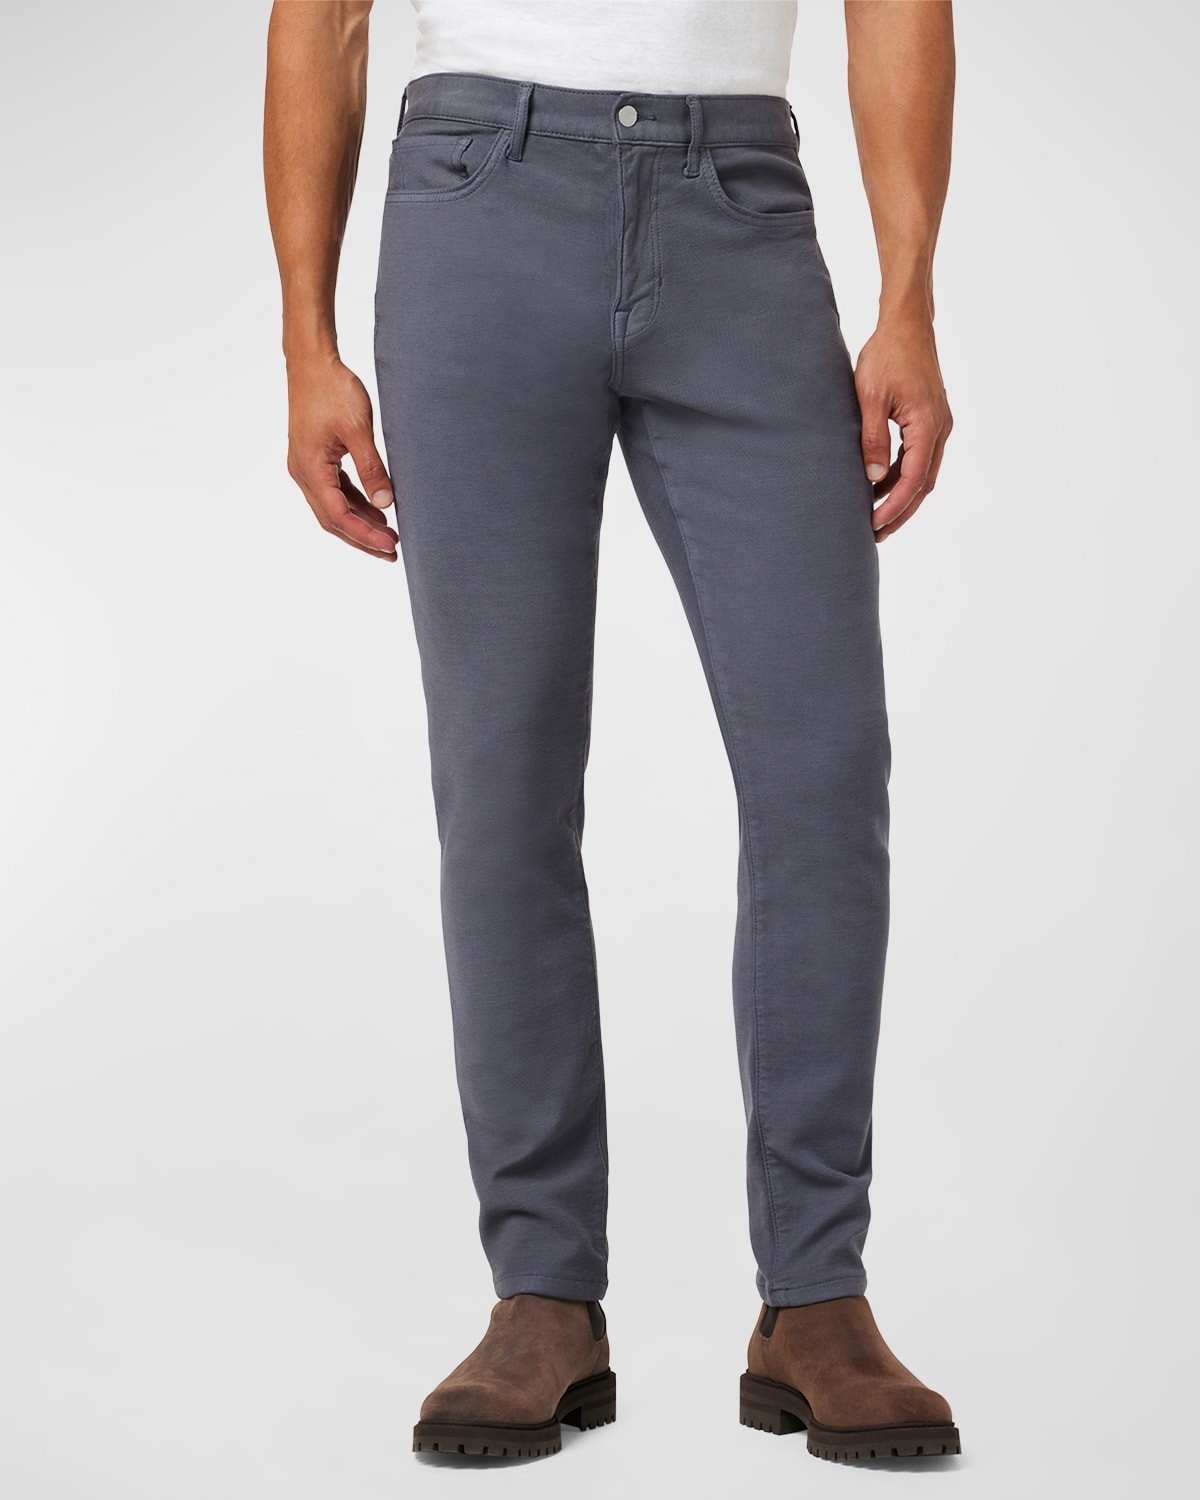 Men's Asher Soft Slim-Fit Jeans